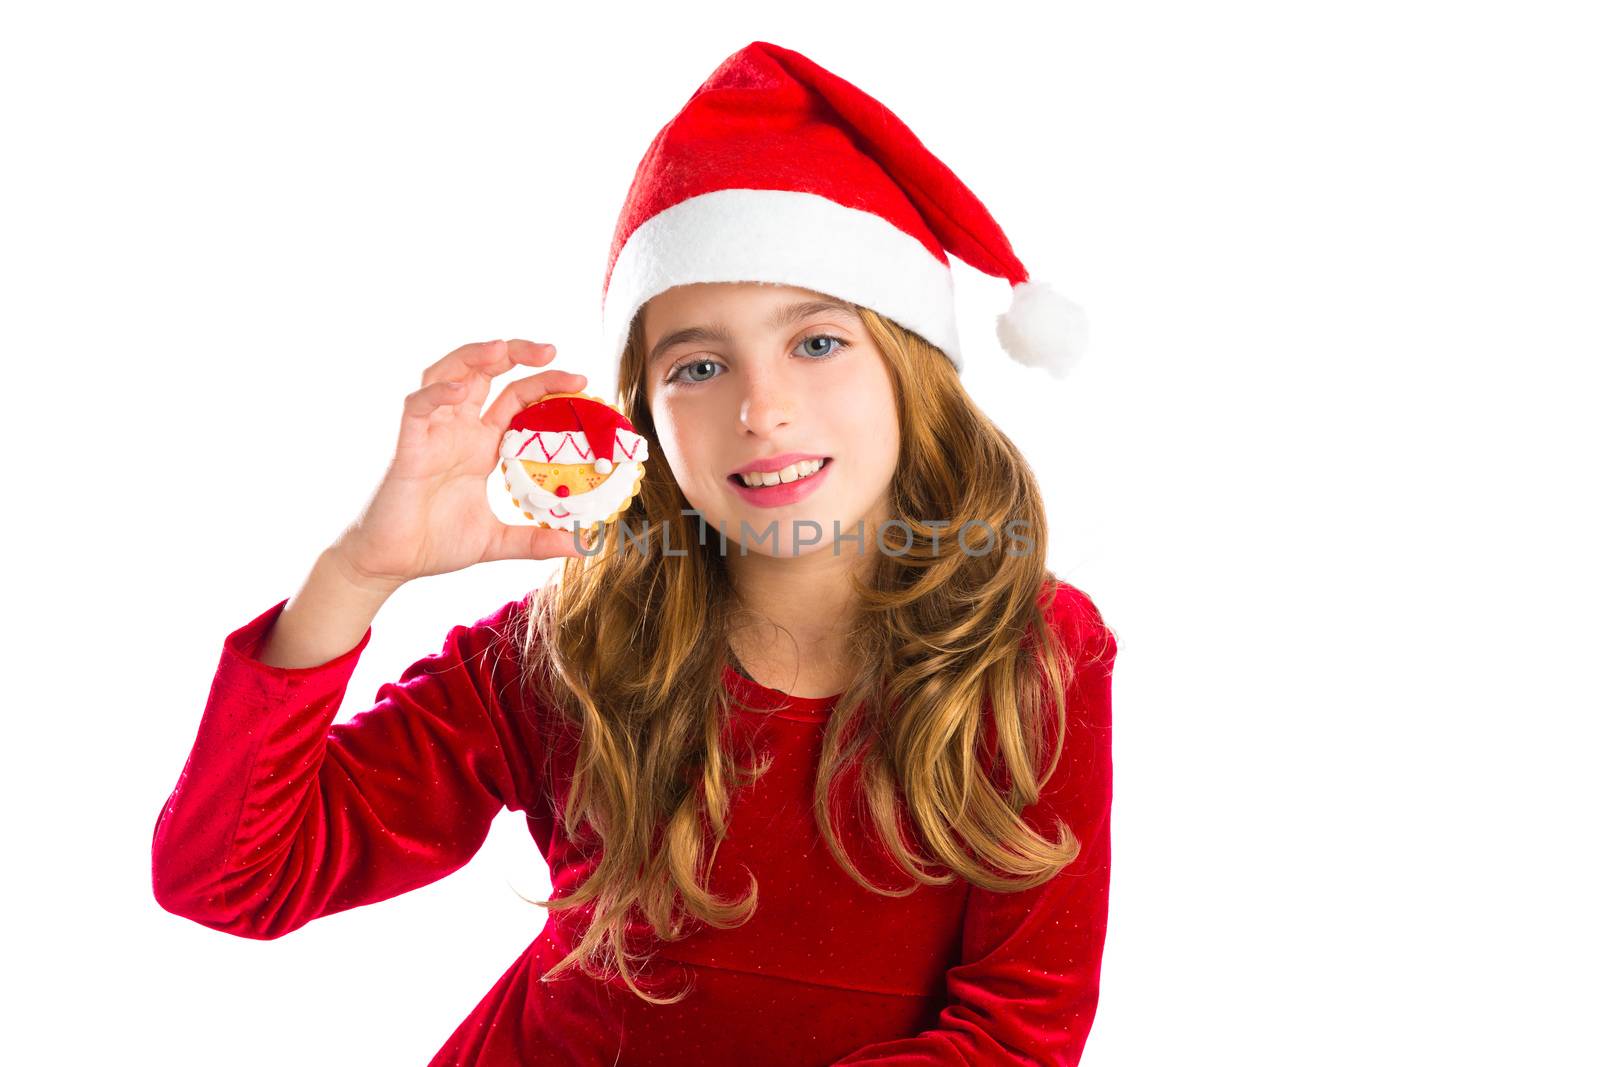 Christmas Santa cookie and Xmas dress kid girl by lunamarina